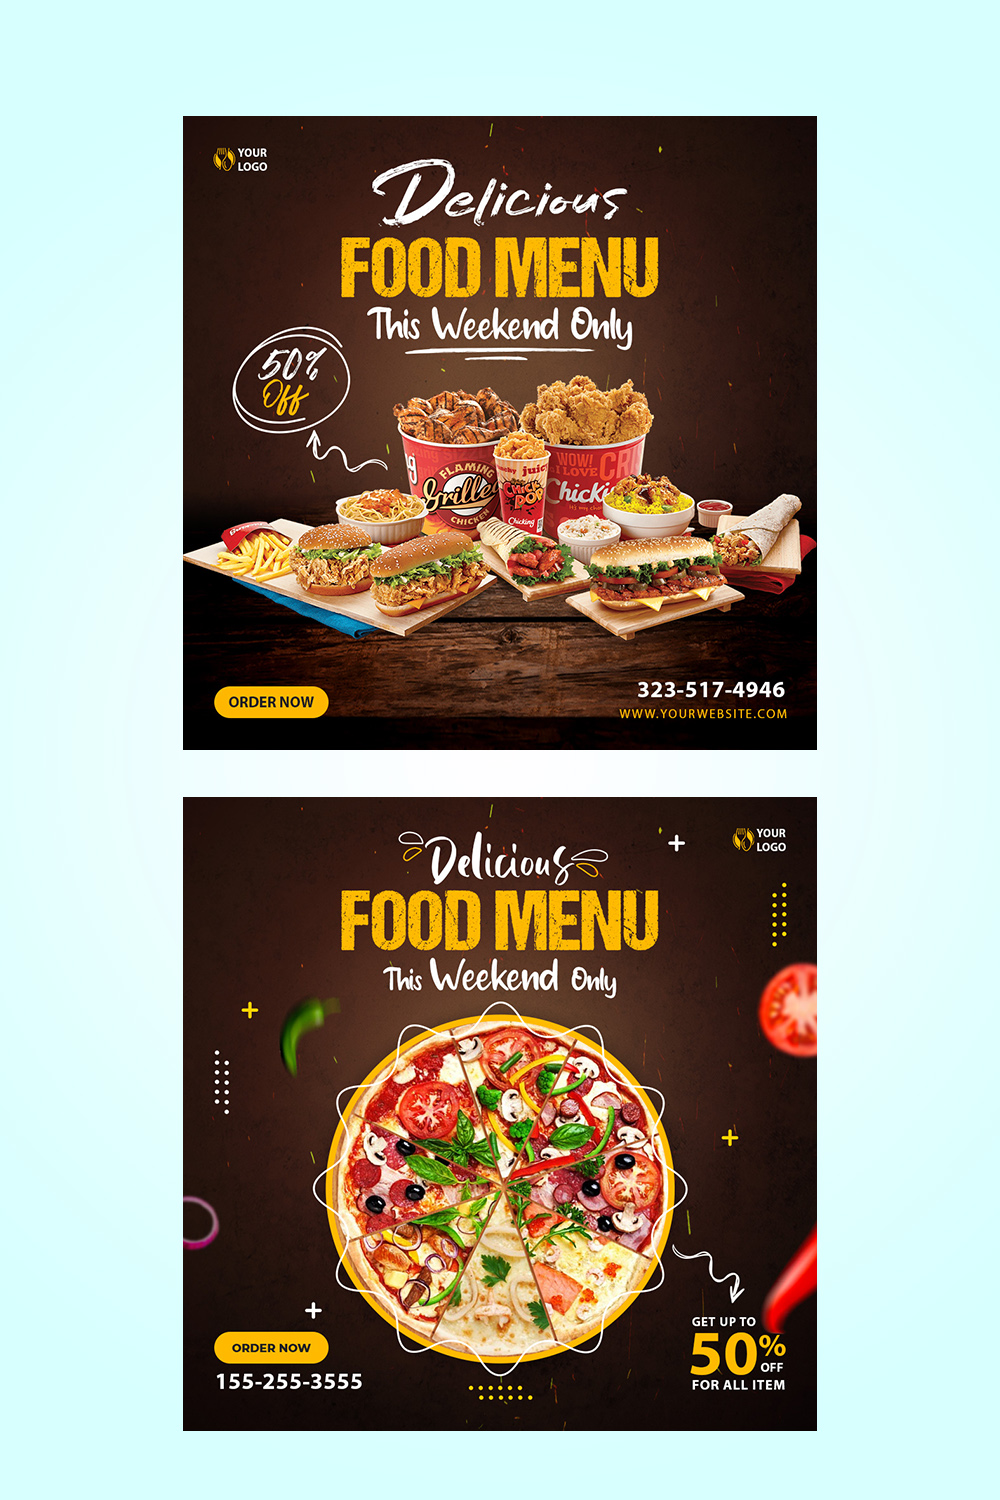 2 Food Design Templates For Social Media Post pinterest image.